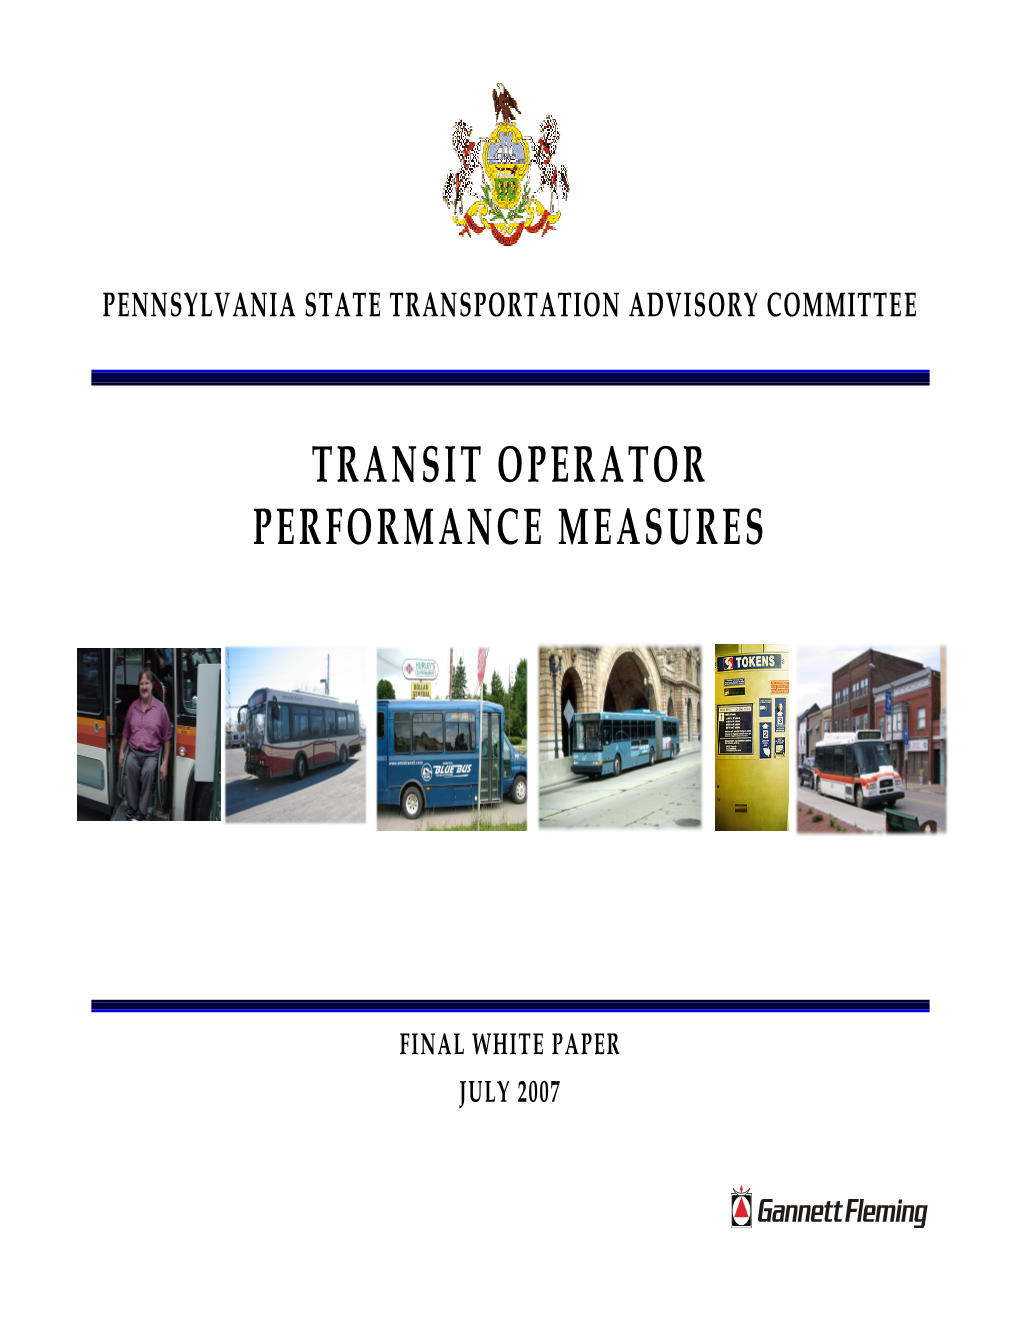 Transit Operator Performance Measures